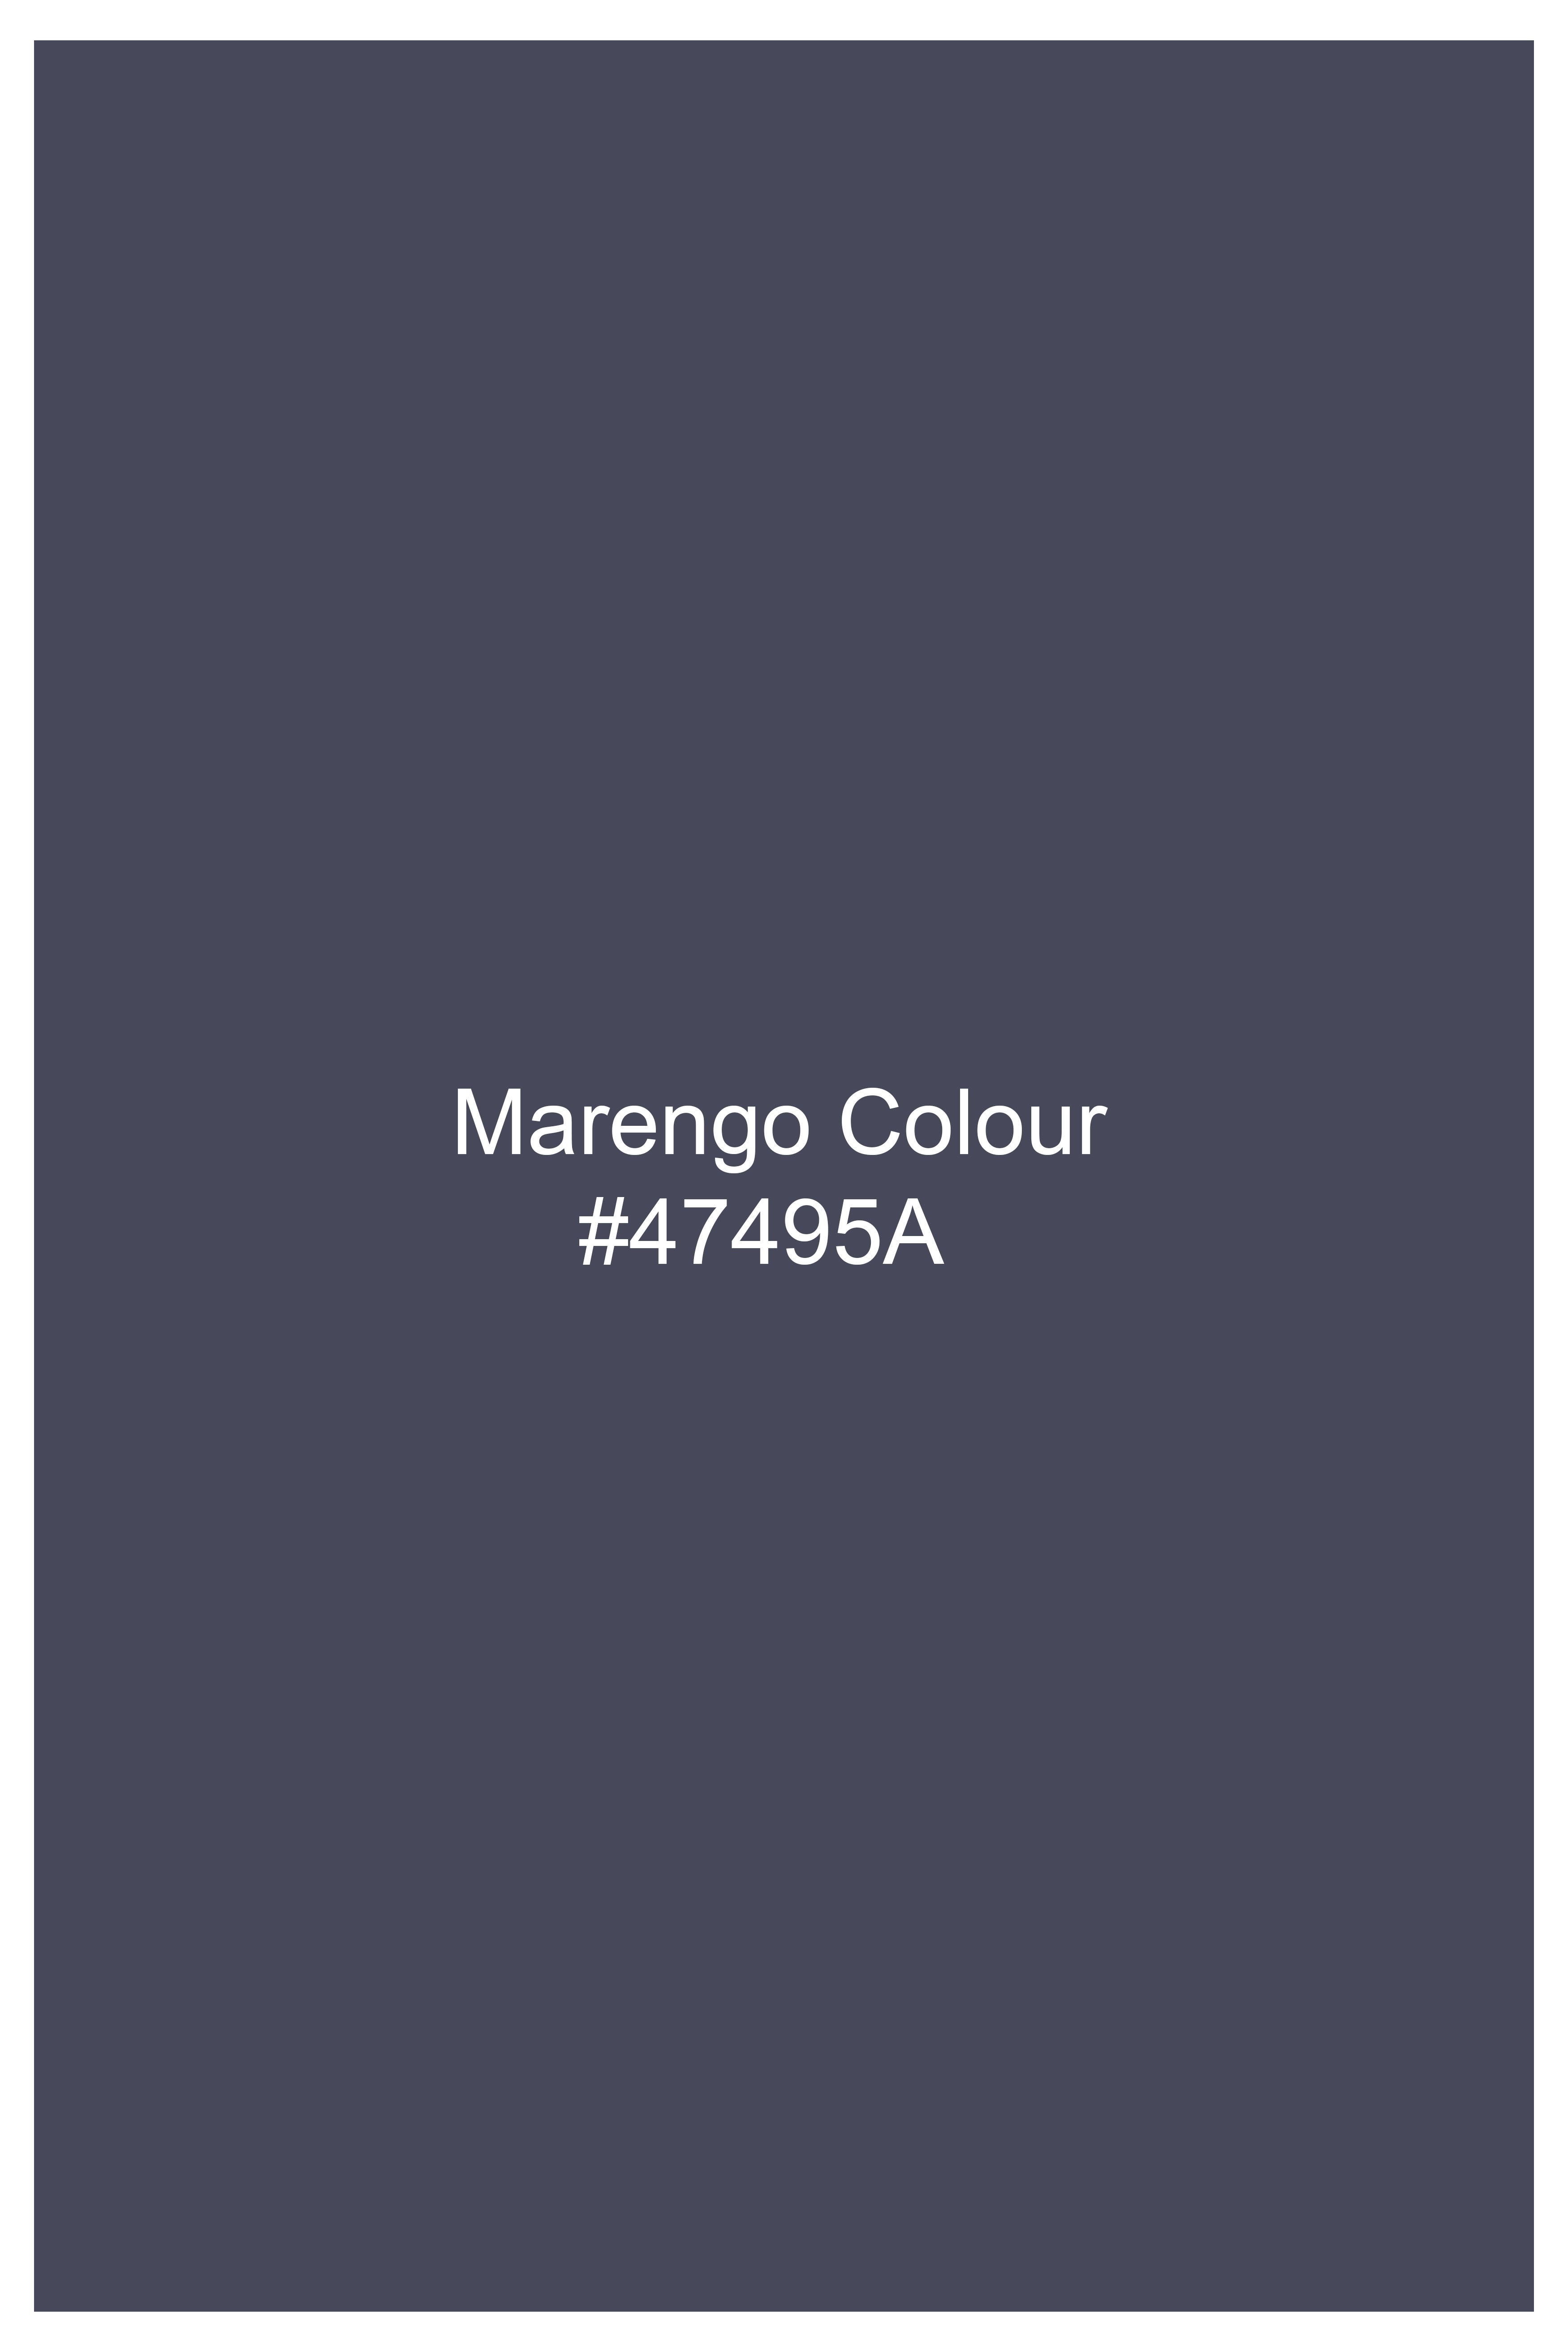 Marengo Gray with Horizontal Stitches Wool Rich Bandhgala Designer Suit ST2973-BG-D168-36, ST2973-BG-D168-38, ST2973-BG-D168-40, ST2973-BG-D168-42, ST2973-BG-D168-44, ST2973-BG-D168-46, ST2973-BG-D168-48, ST2973-BG-D168-50, ST2973-BG-D168-52, ST2973-BG-D168-54, ST2973-BG-D168-56, ST2973-BG-D168-58, ST2973-BG-D168-60